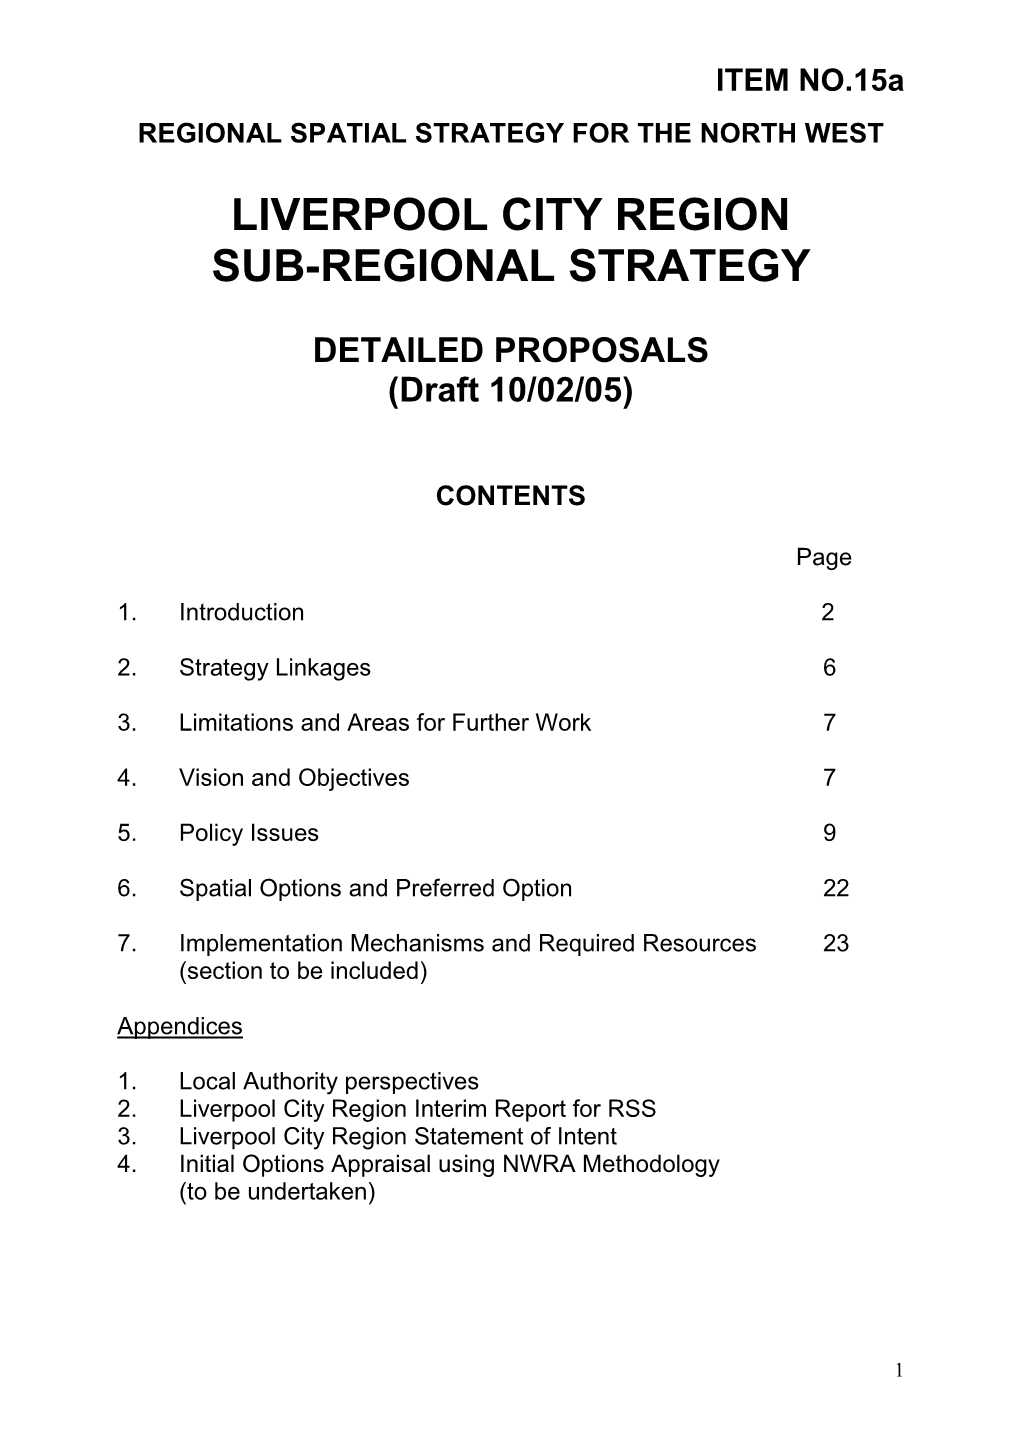 Liverpool City Region Sub-Regional Strategy